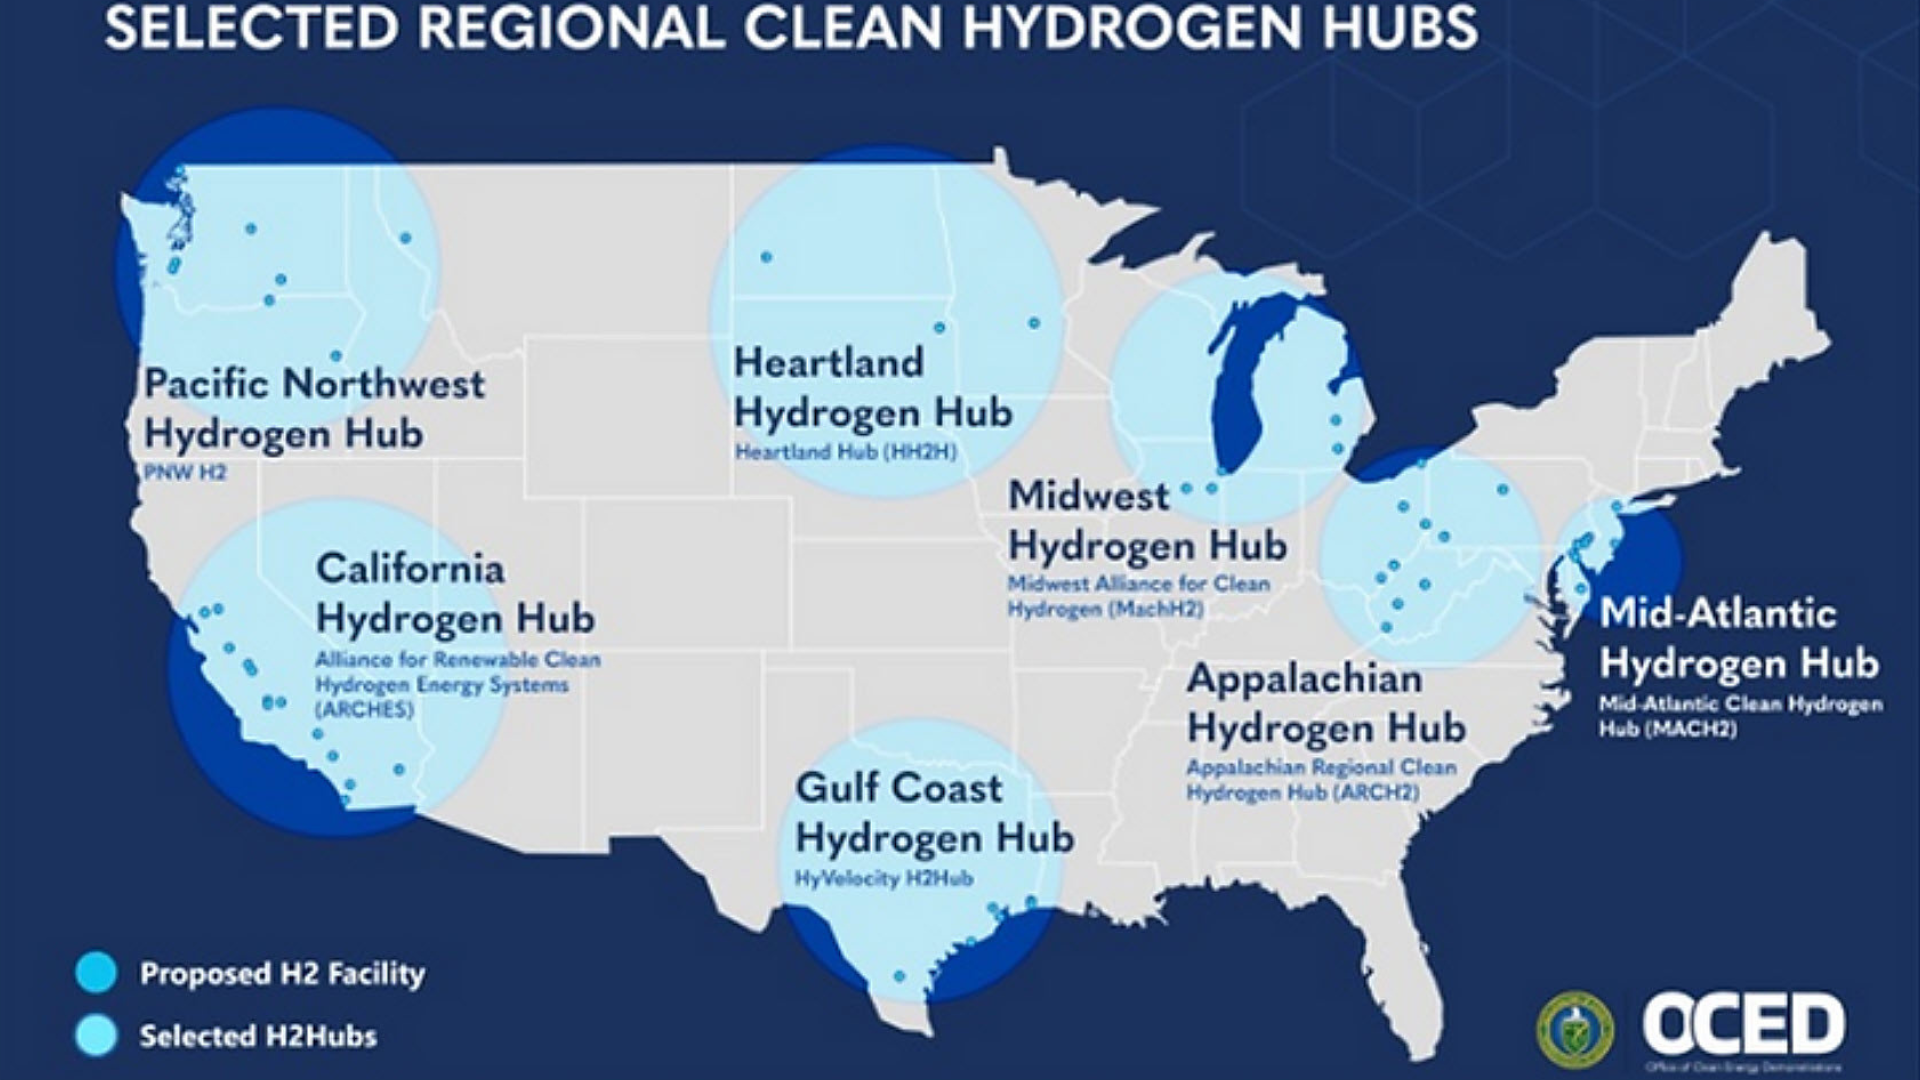 OCED map of Hydrogen Hub locations across the U.S.